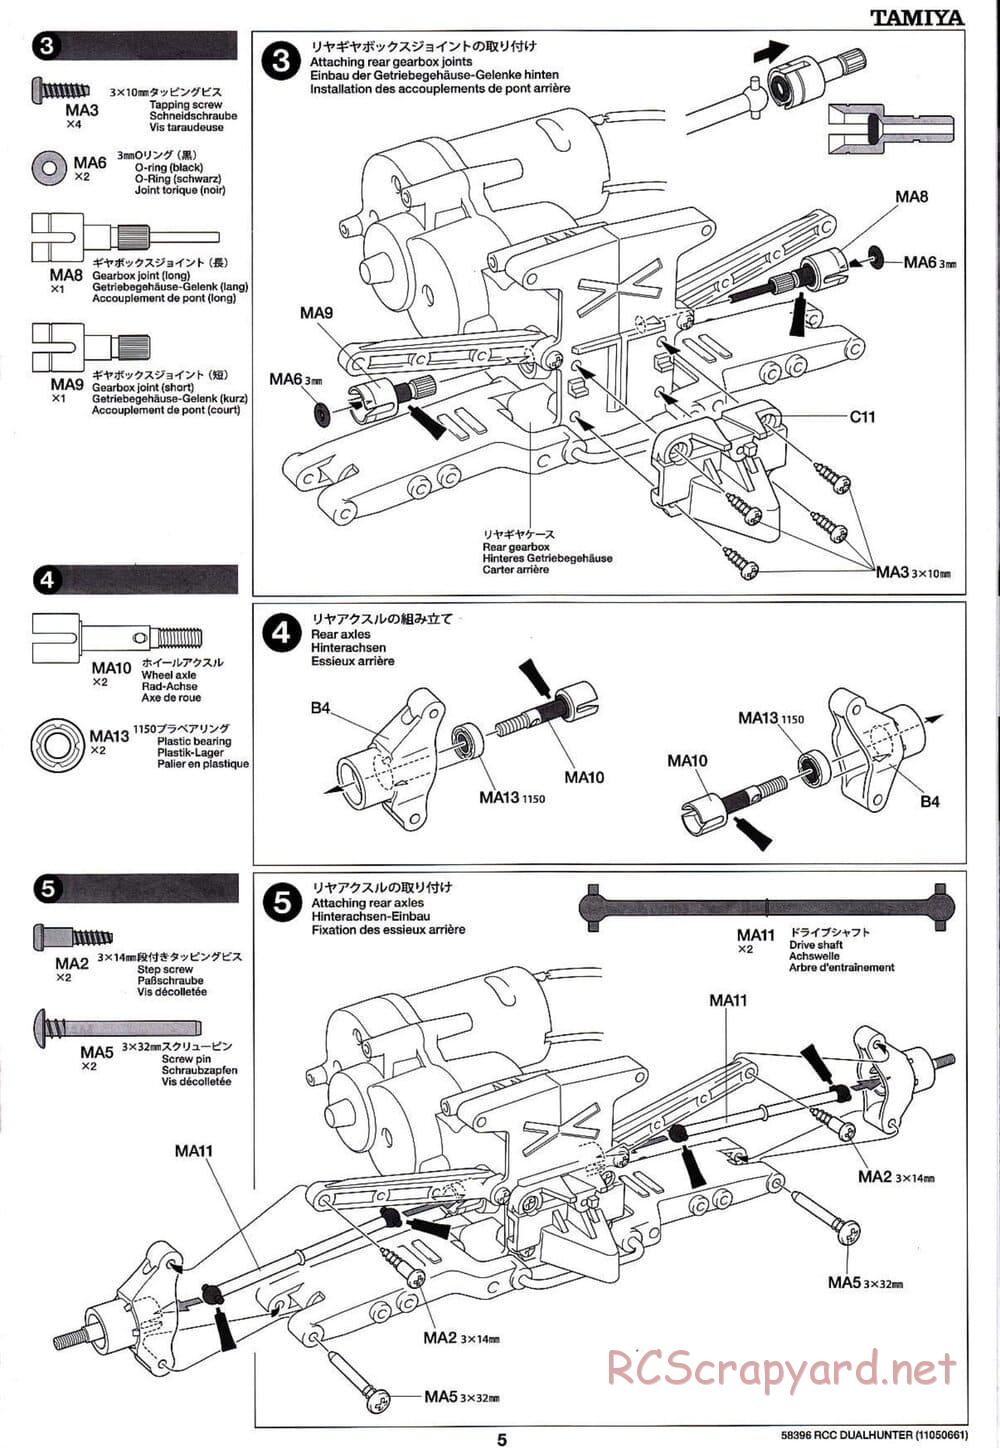 Tamiya - Dualhunter - WR-01 Chassis - Manual - Page 5